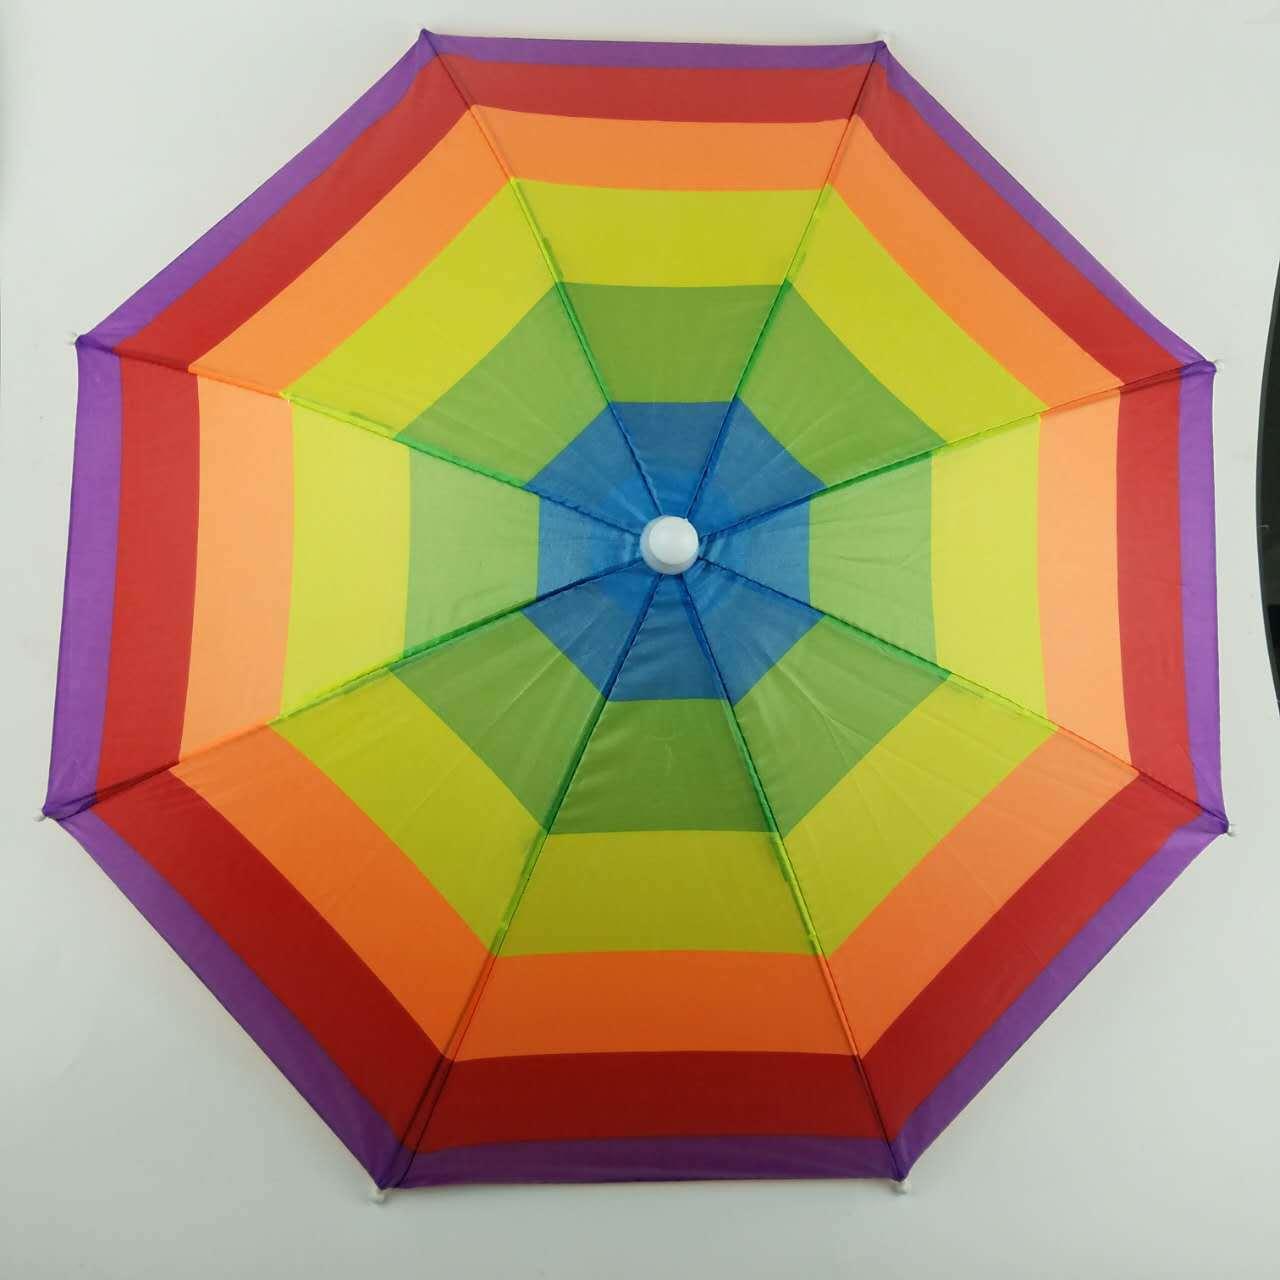 50CM Rain UV Umbrella Windproof Head Umbrellas Caps ร่มหัว ใช้: ตก ปลา/เดิน/โรงเรียน